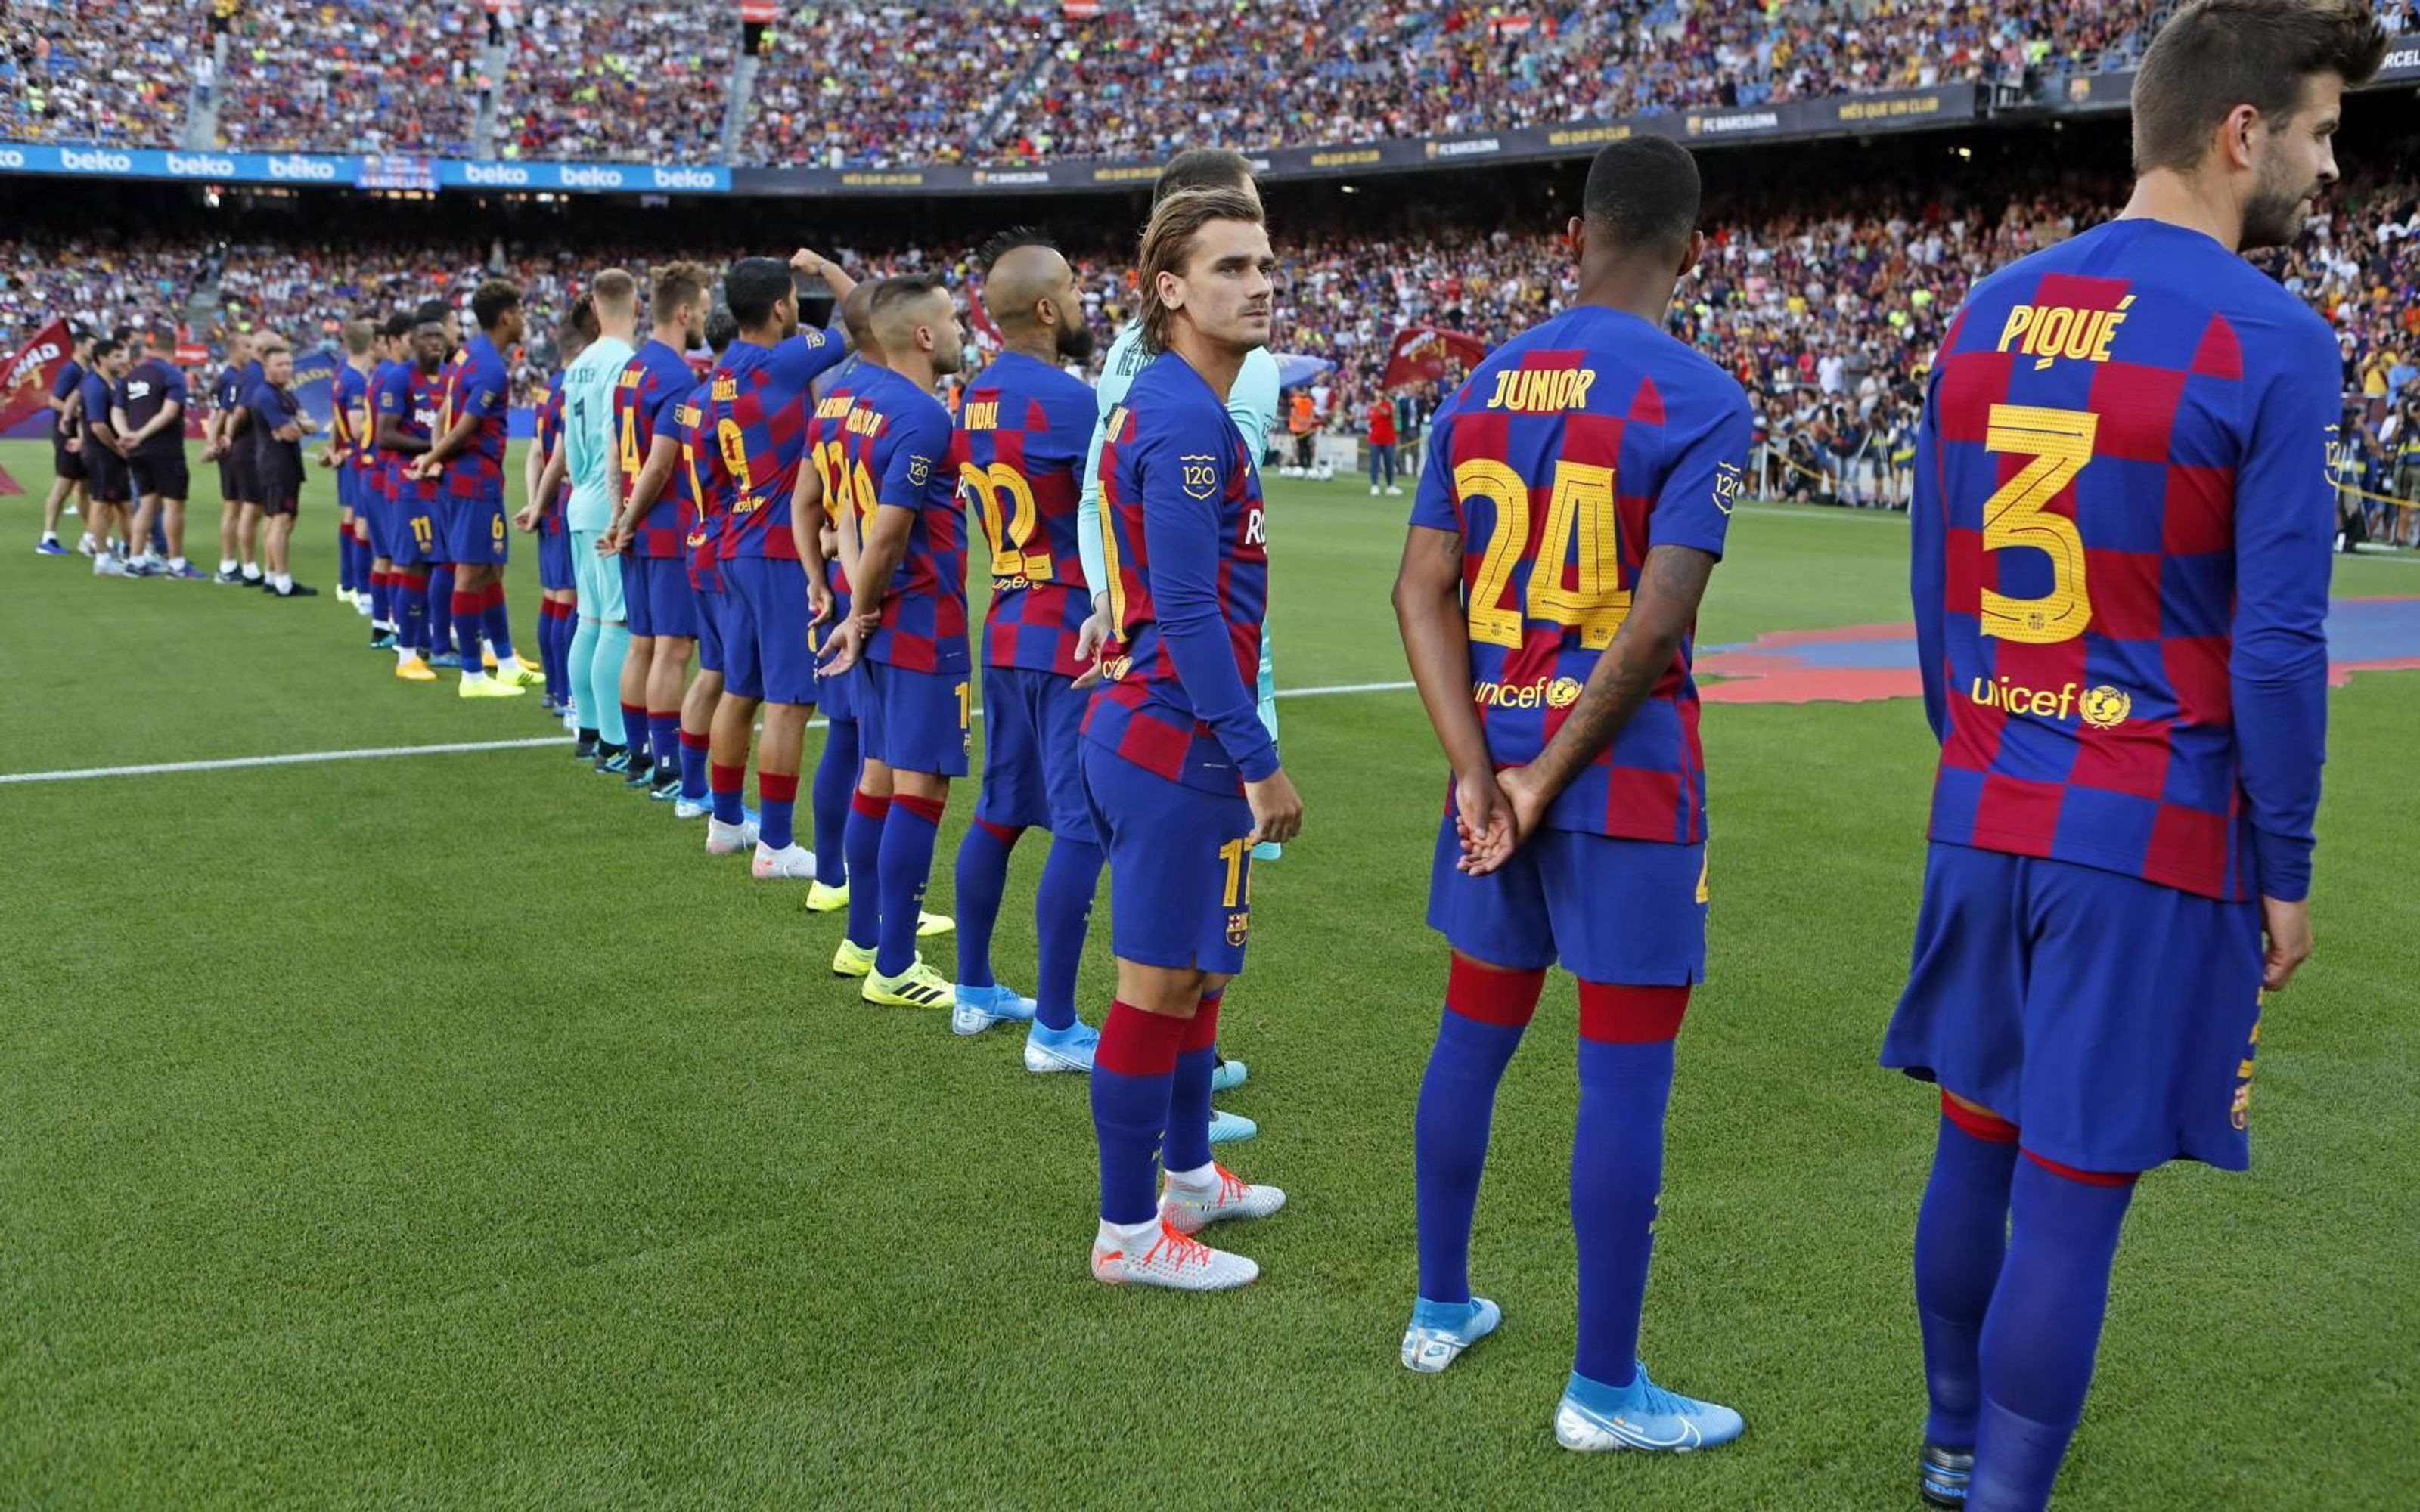 Los jugadores del Barça en el Trofeo Joan Gamper / FC Barcelona